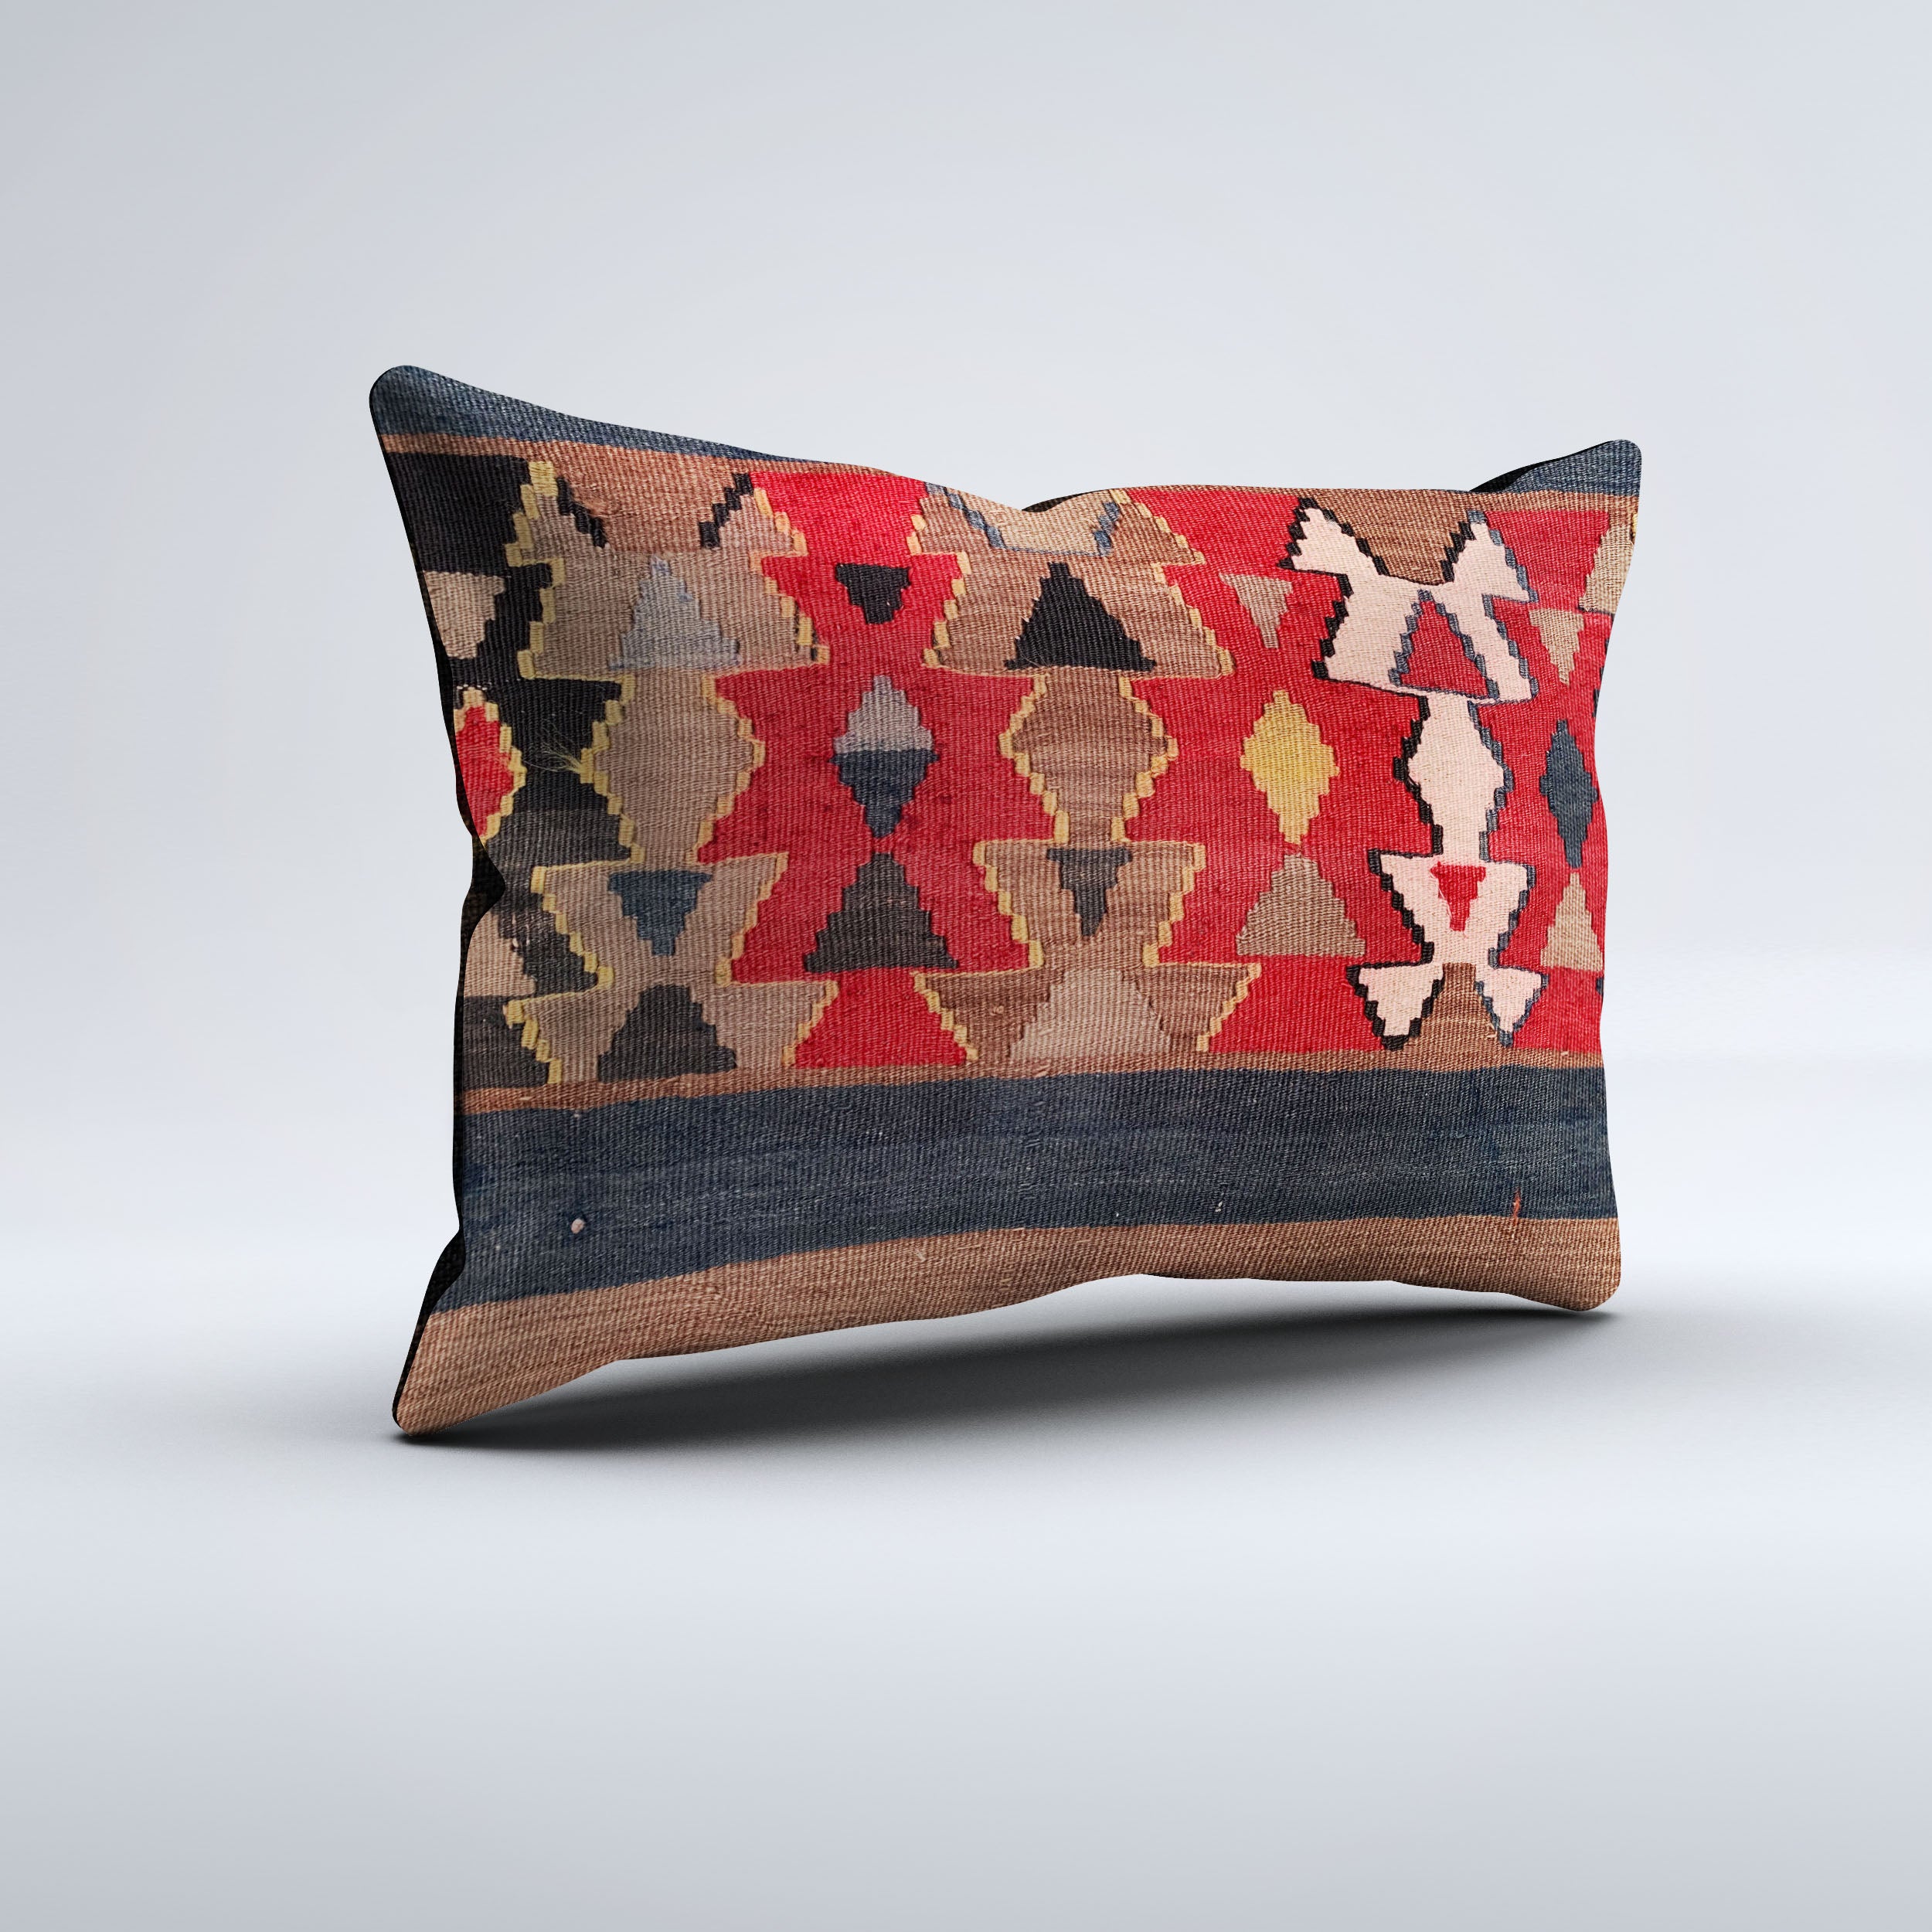 Vintage Turkish Kilim Cushion Cover 60x40 cm Square Wool Kelim Pillowcase 64777